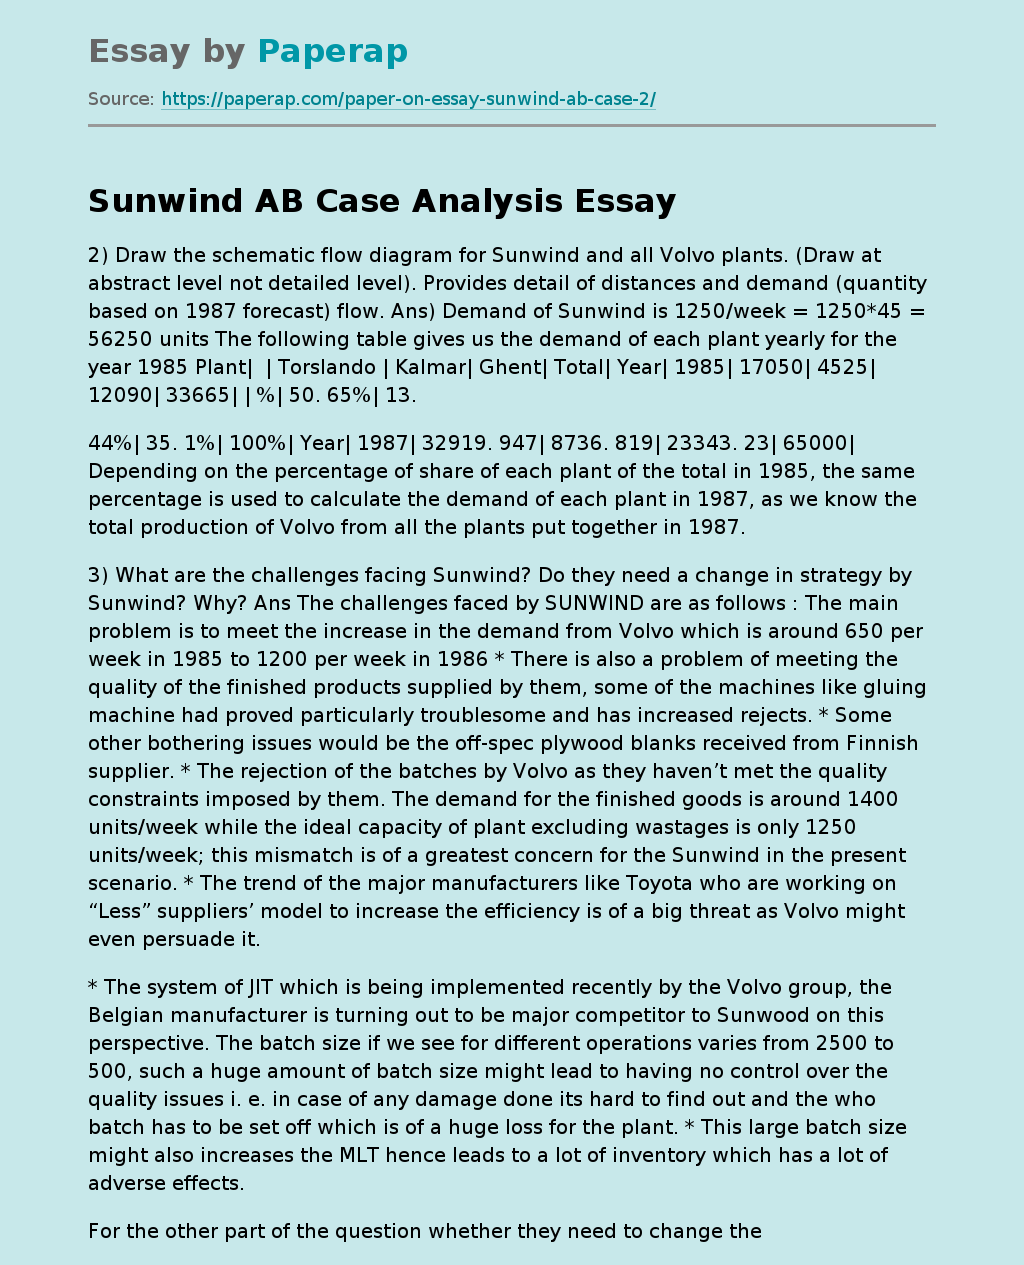 Sunwind AB Case Analysis